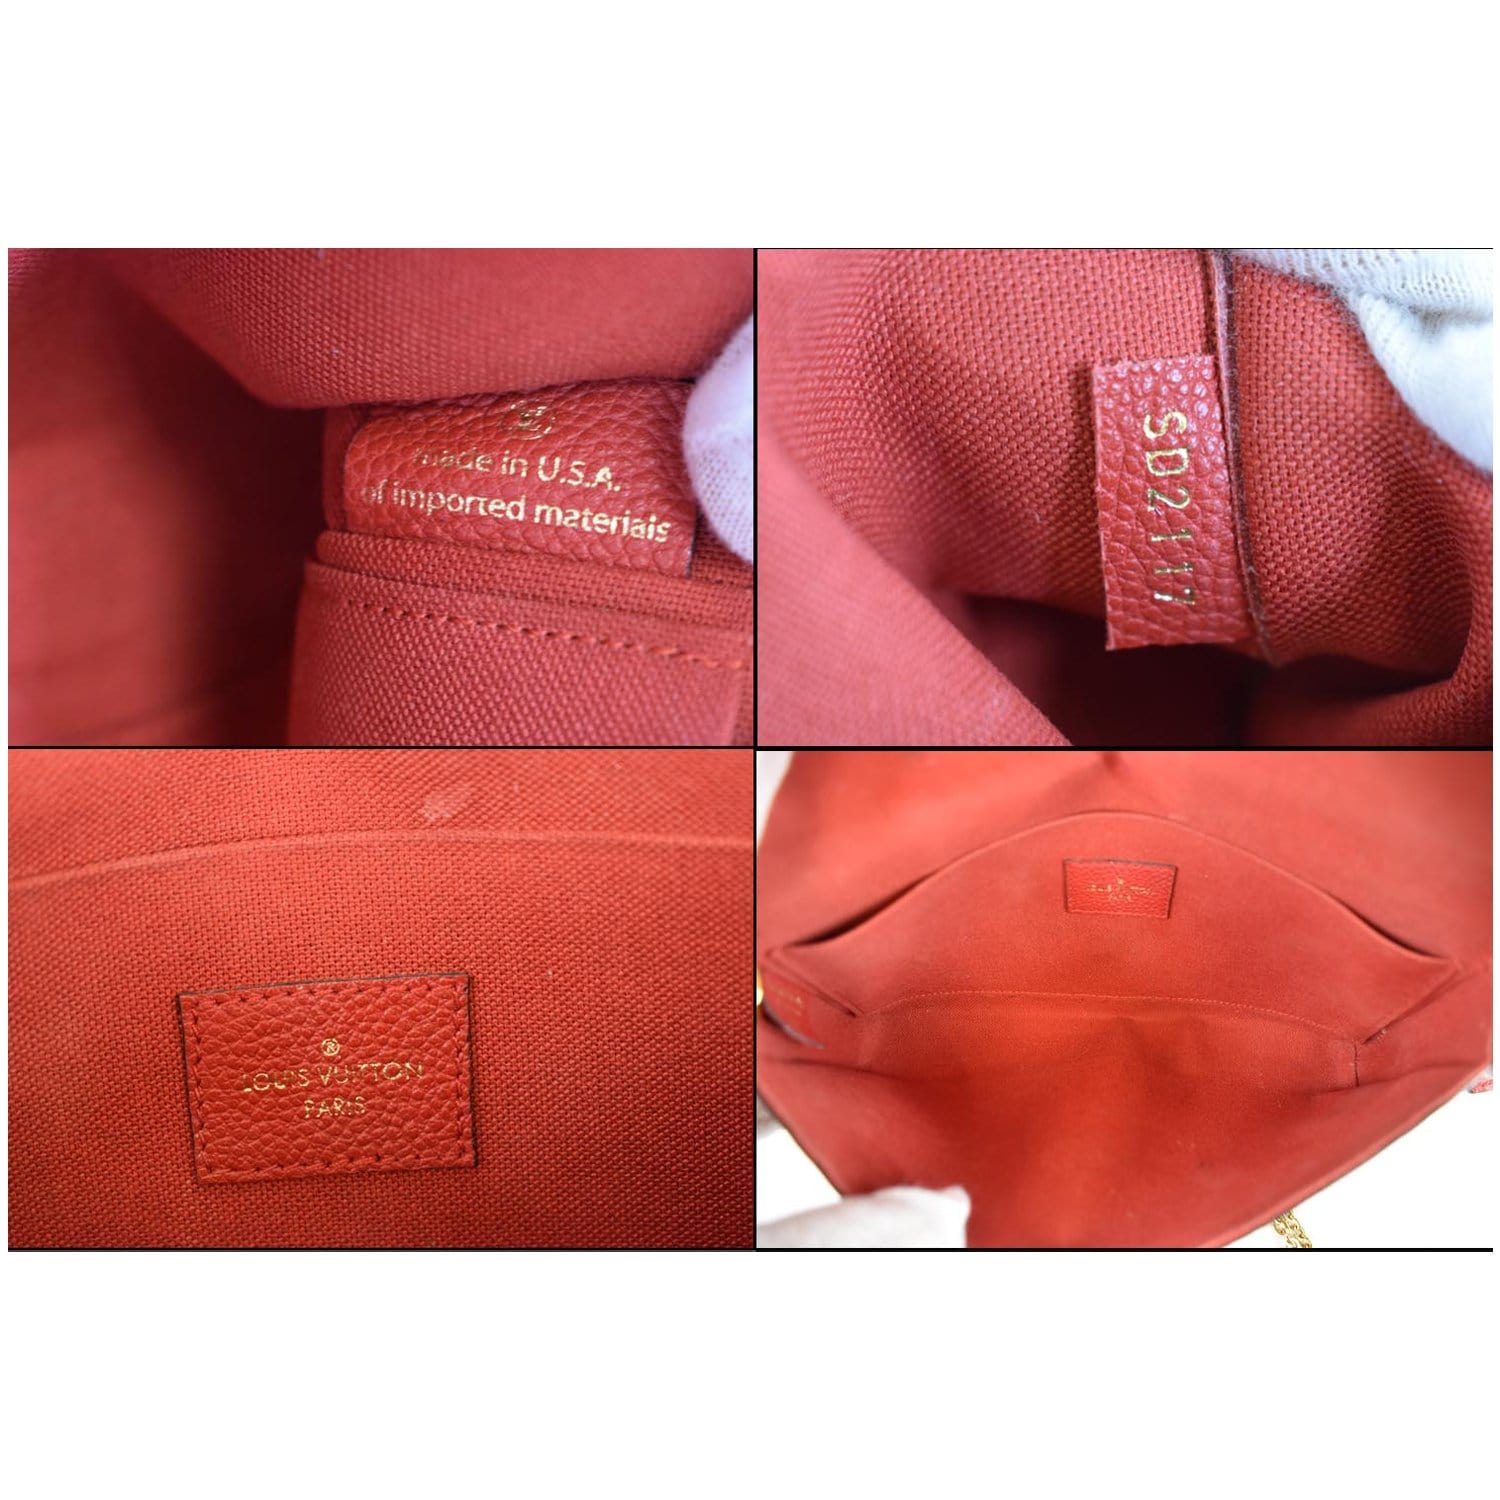 Louis Vuitton Félicie Pochette in Red